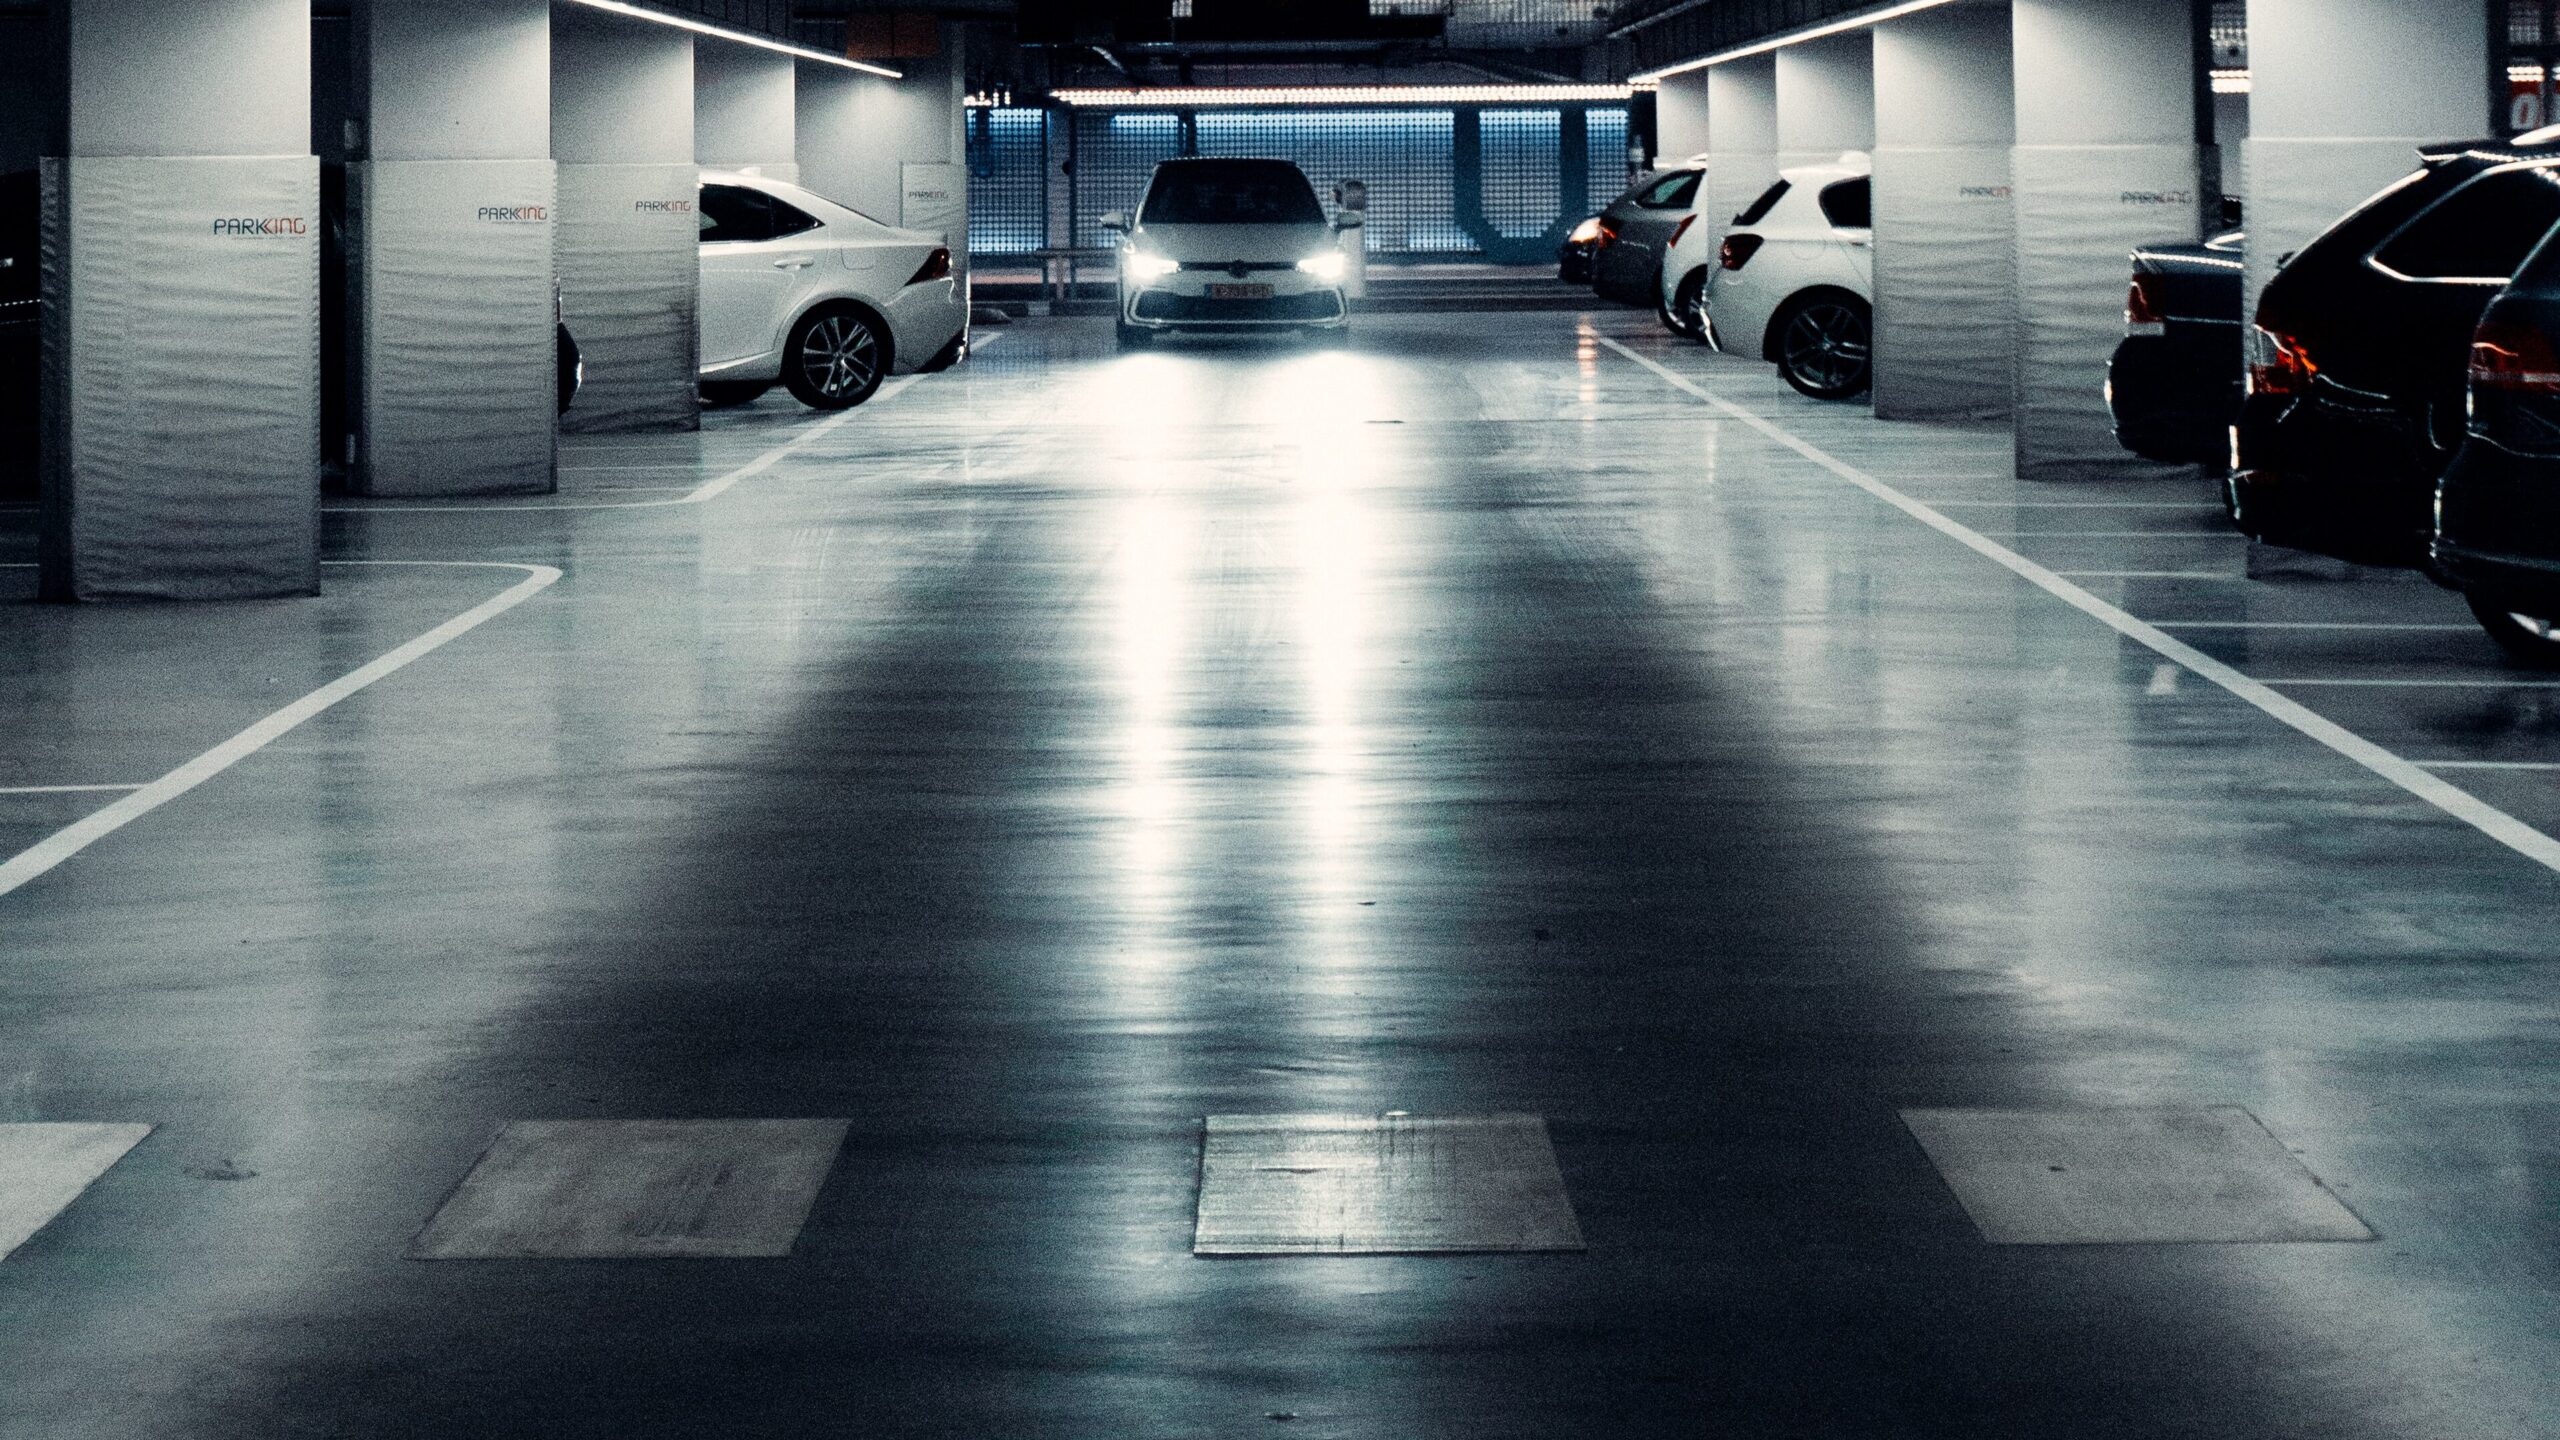 background of a clean parking garage